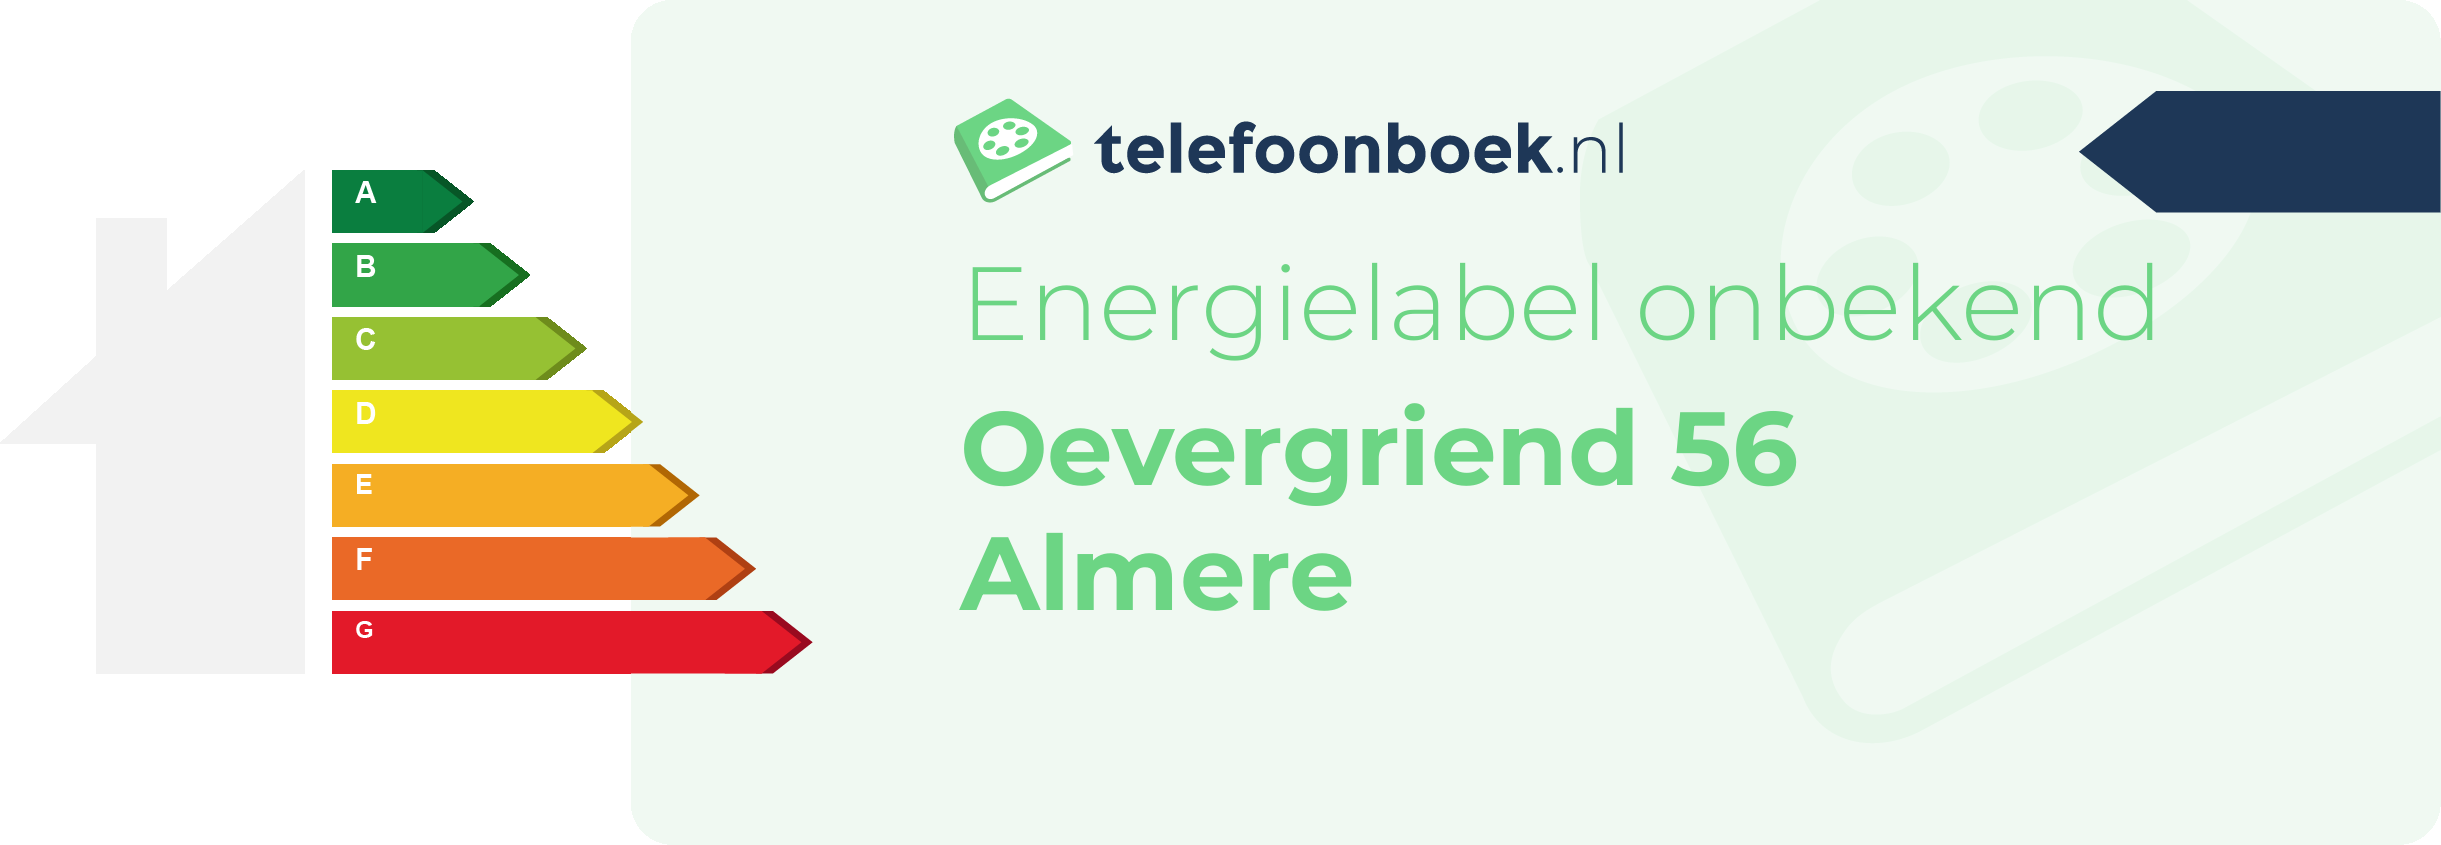 Energielabel Oevergriend 56 Almere